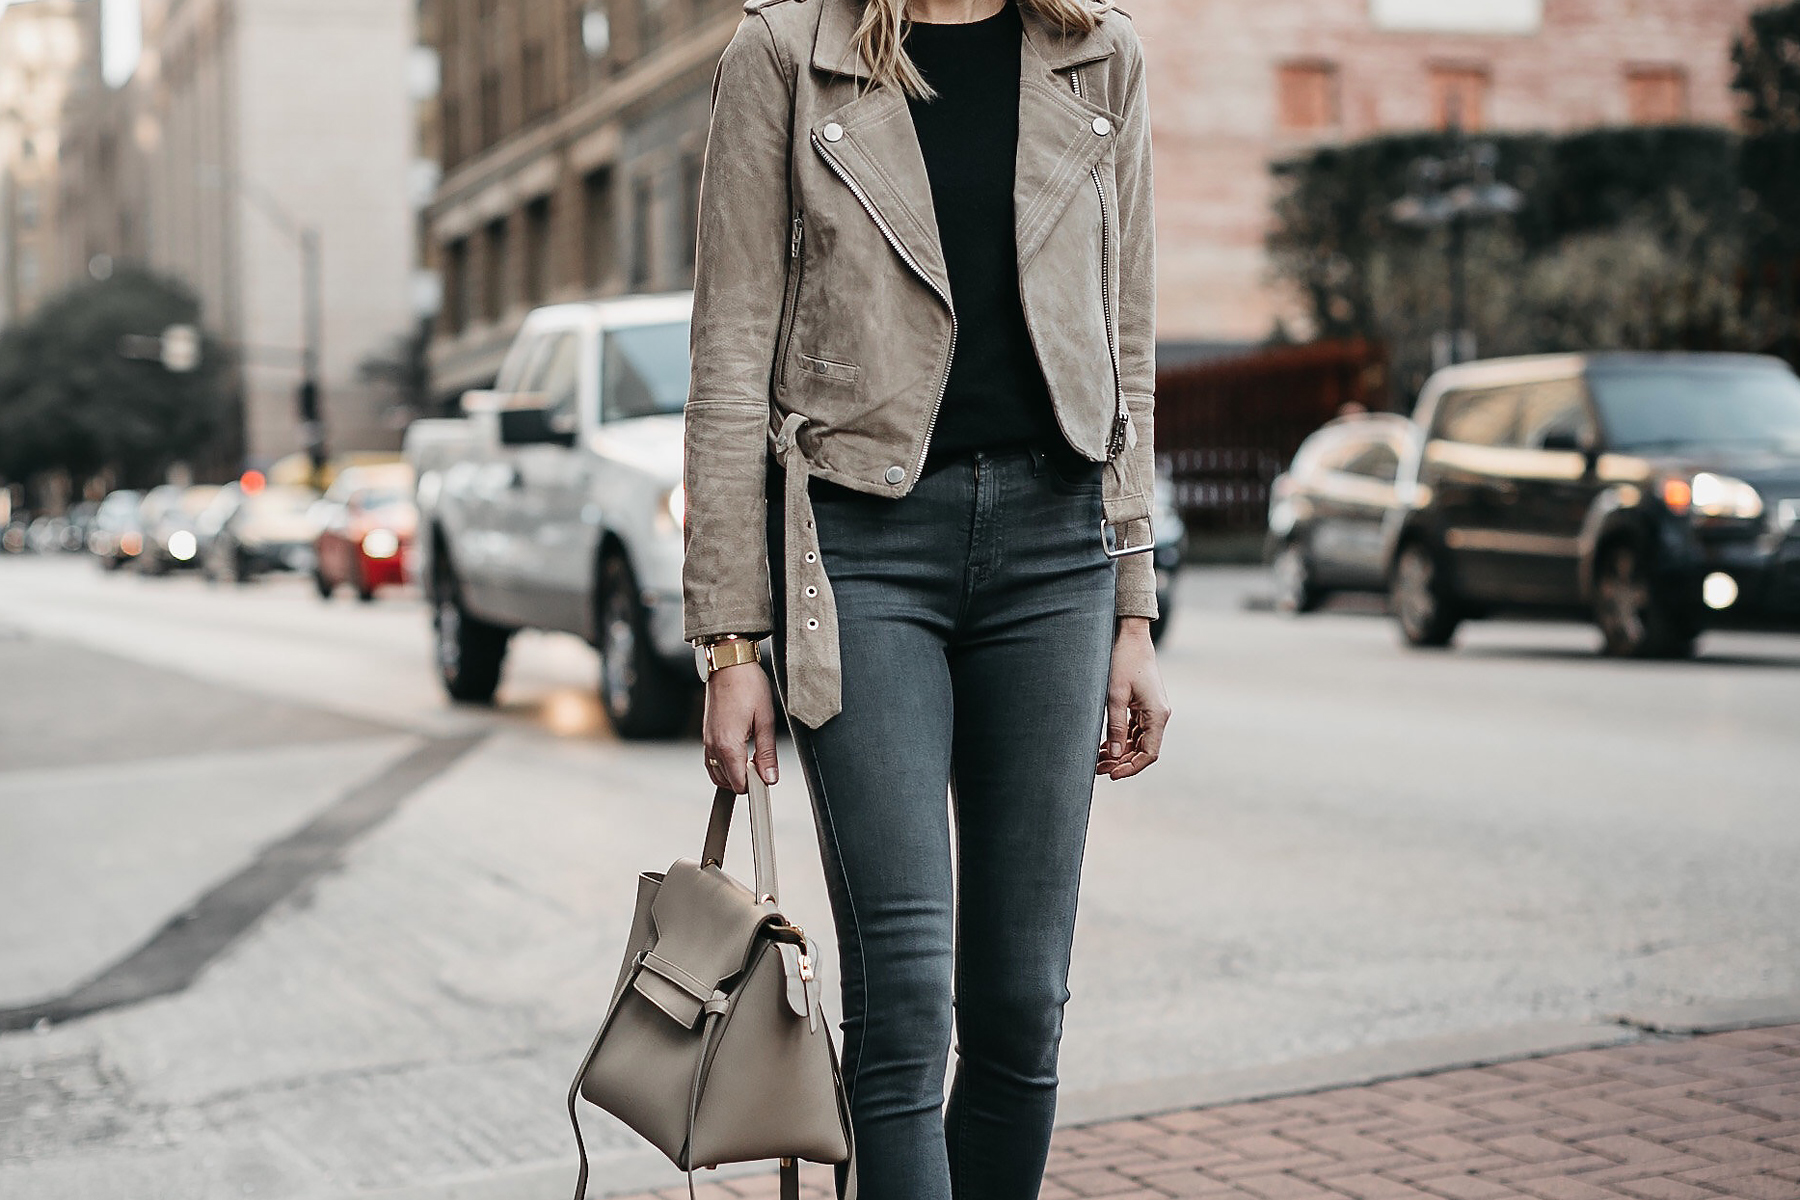 Blanknyc Suede Moto Jacket Black Sweater 7 For All Mankind Grey Skinny Jeans Celine Mini Belt Bag Fashion Jackson Dallas Blogger Fashion Blogger Street Style